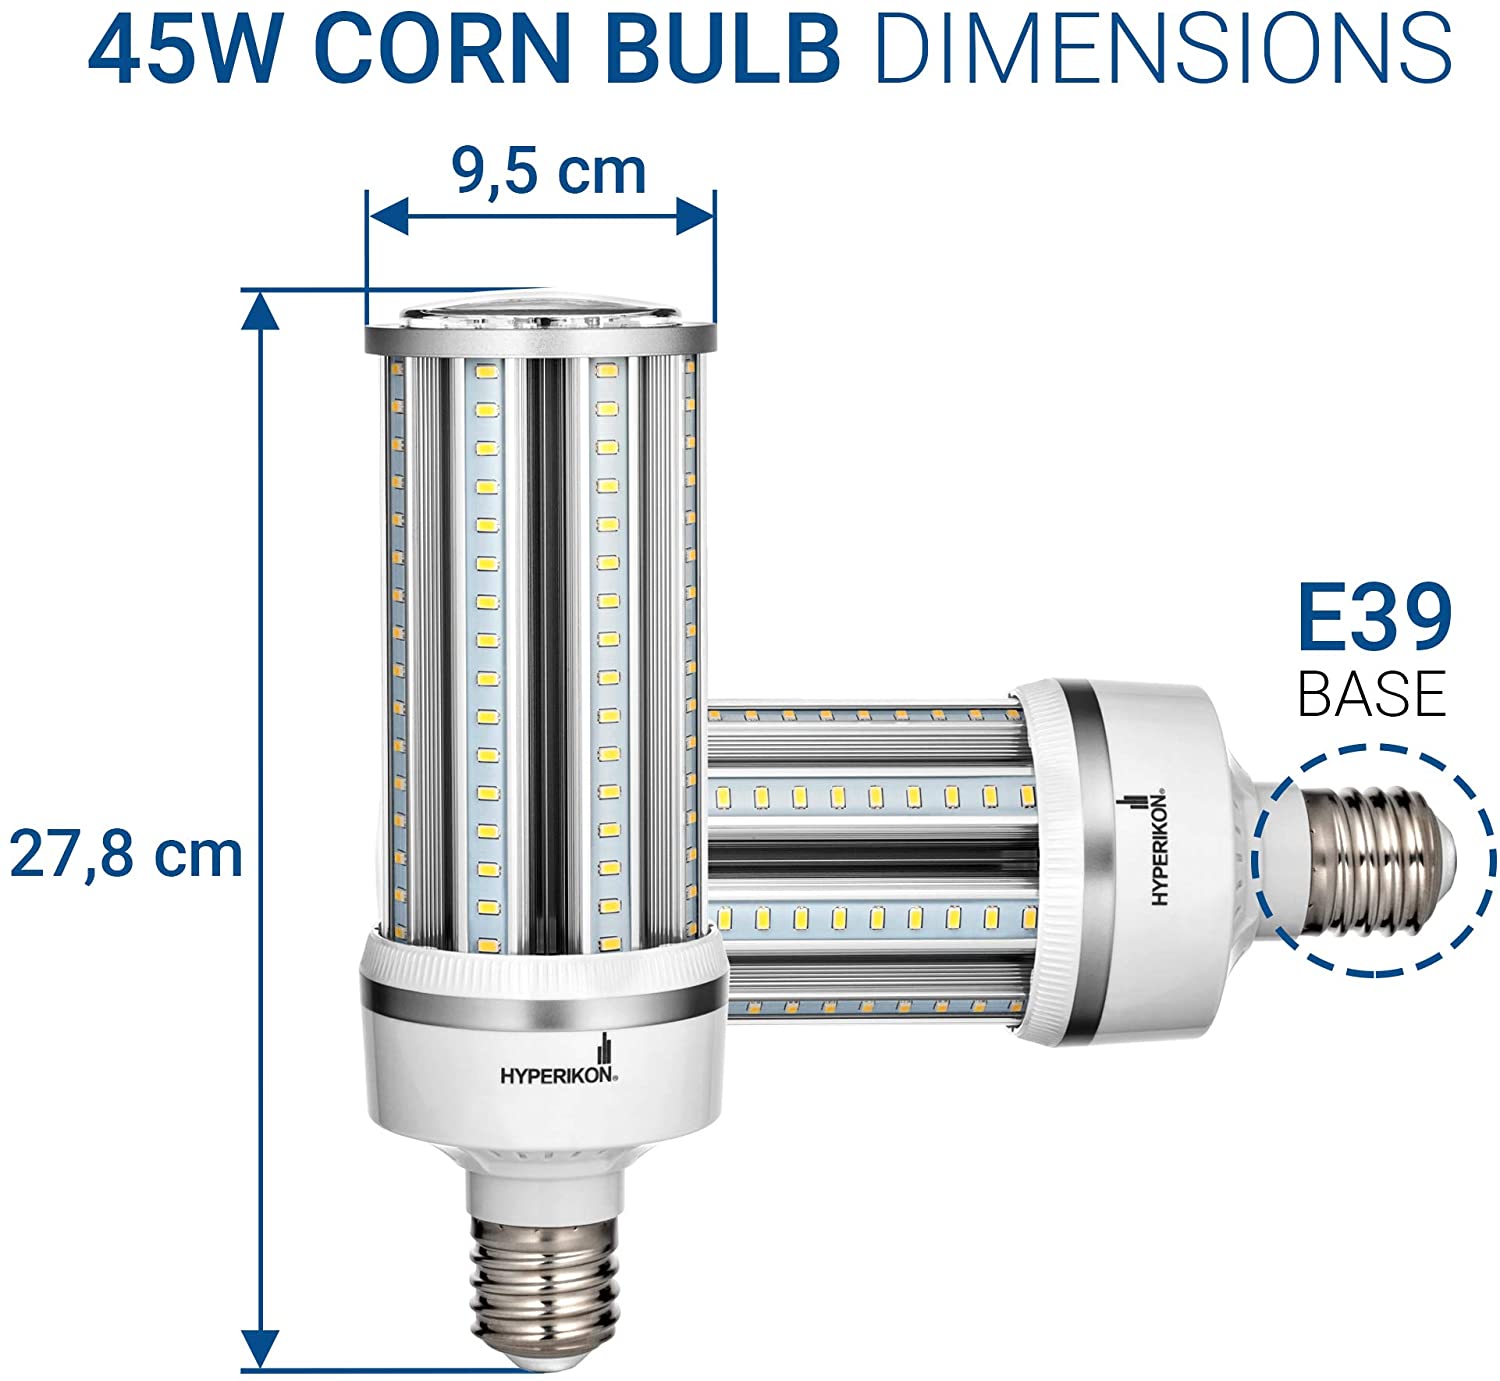 Hyperikon LED Light Bulb 45W=250W 4 Pack E26 Base High Efficiency Corn Bulb Omnidirectional UL Crystal White